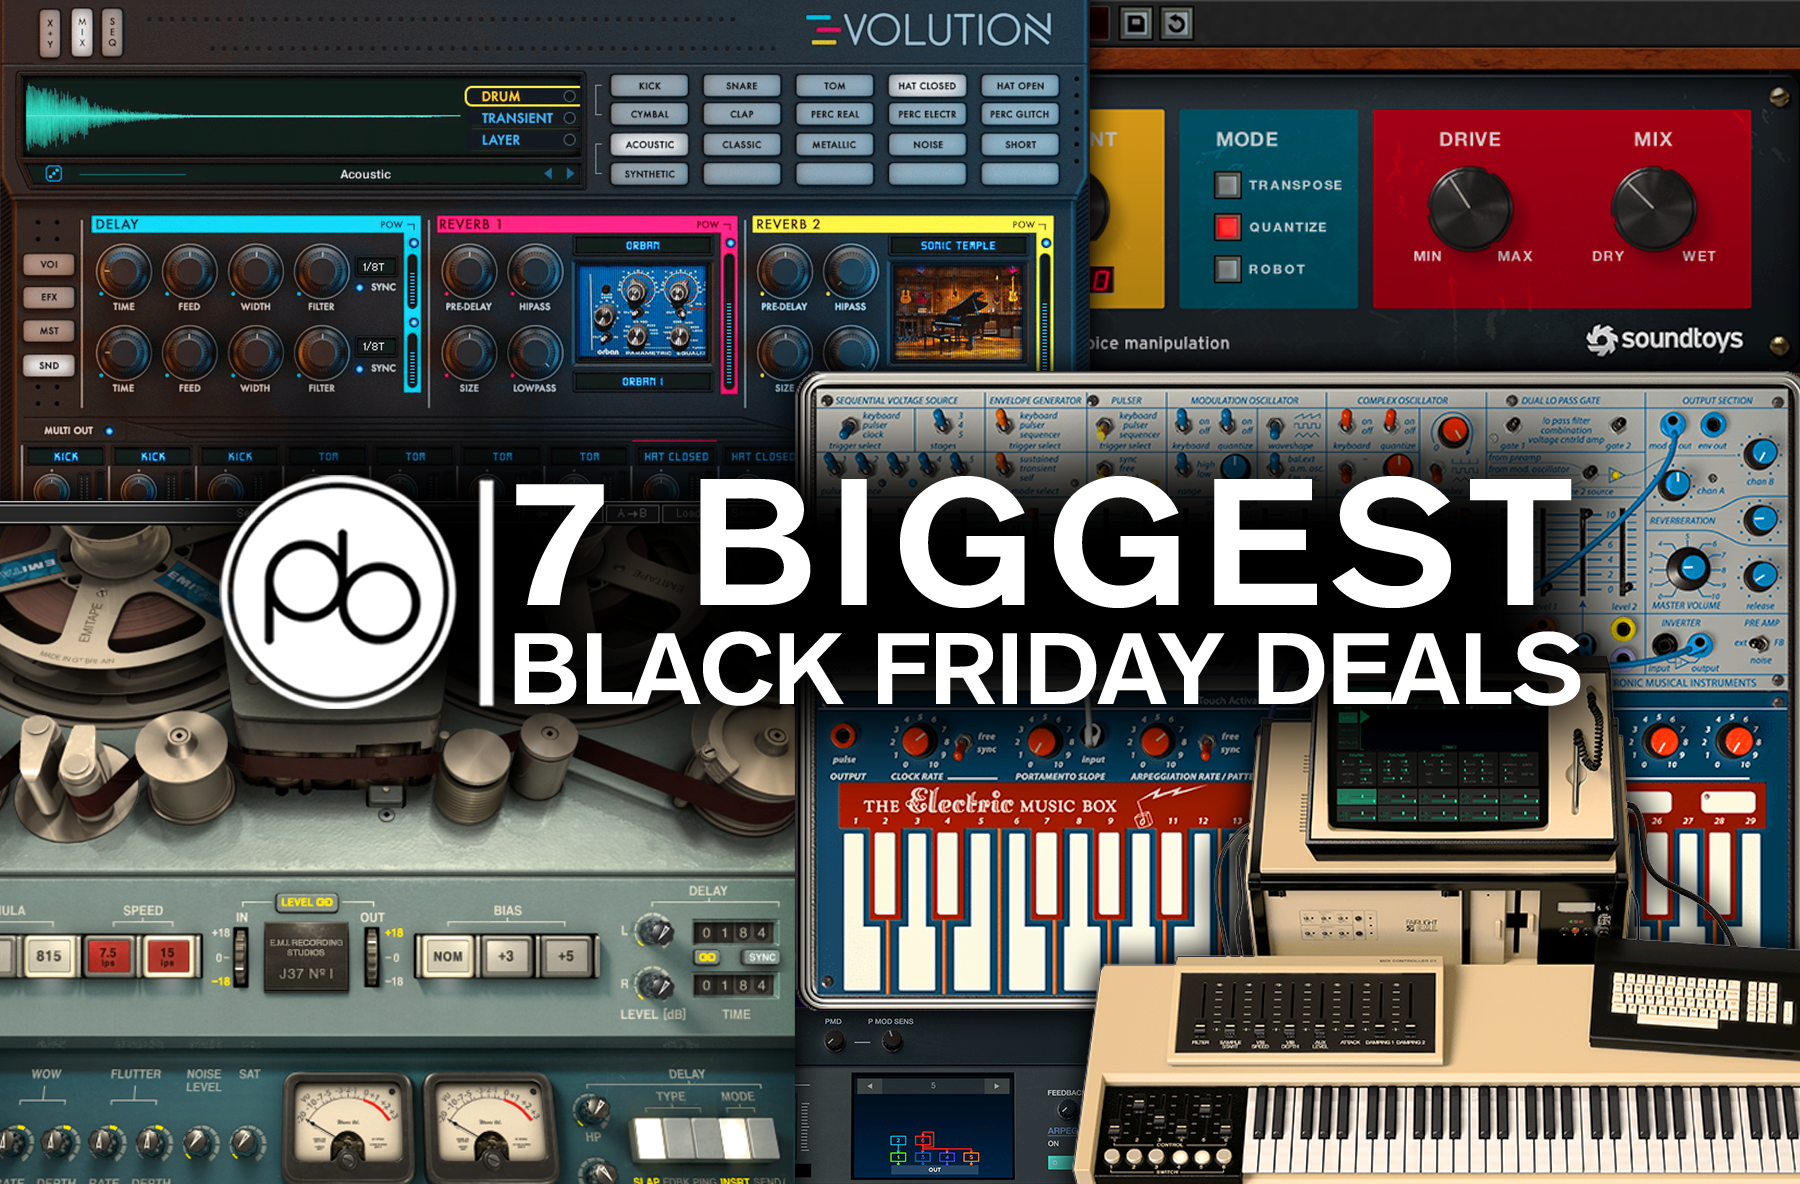 7 Biggest Black Friday Deals for DJs and Producers